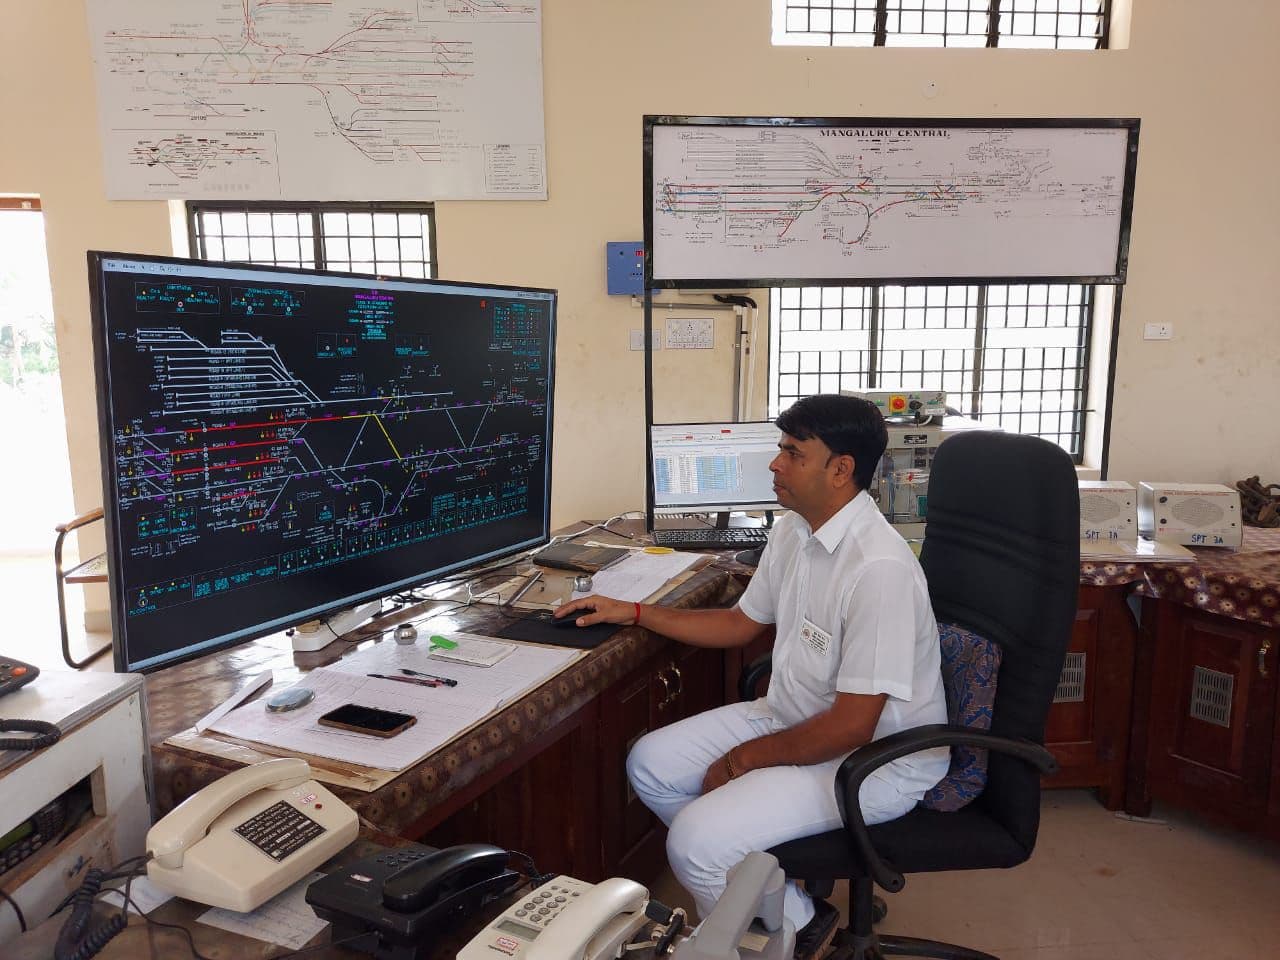 ELECTRONICALLY INTERLOCKEDSIGNALS NOW ENSURESAFE TRAIN MOVEMENTS AT NETRAVATHI CABIN AND MANGALURU CENTRAL